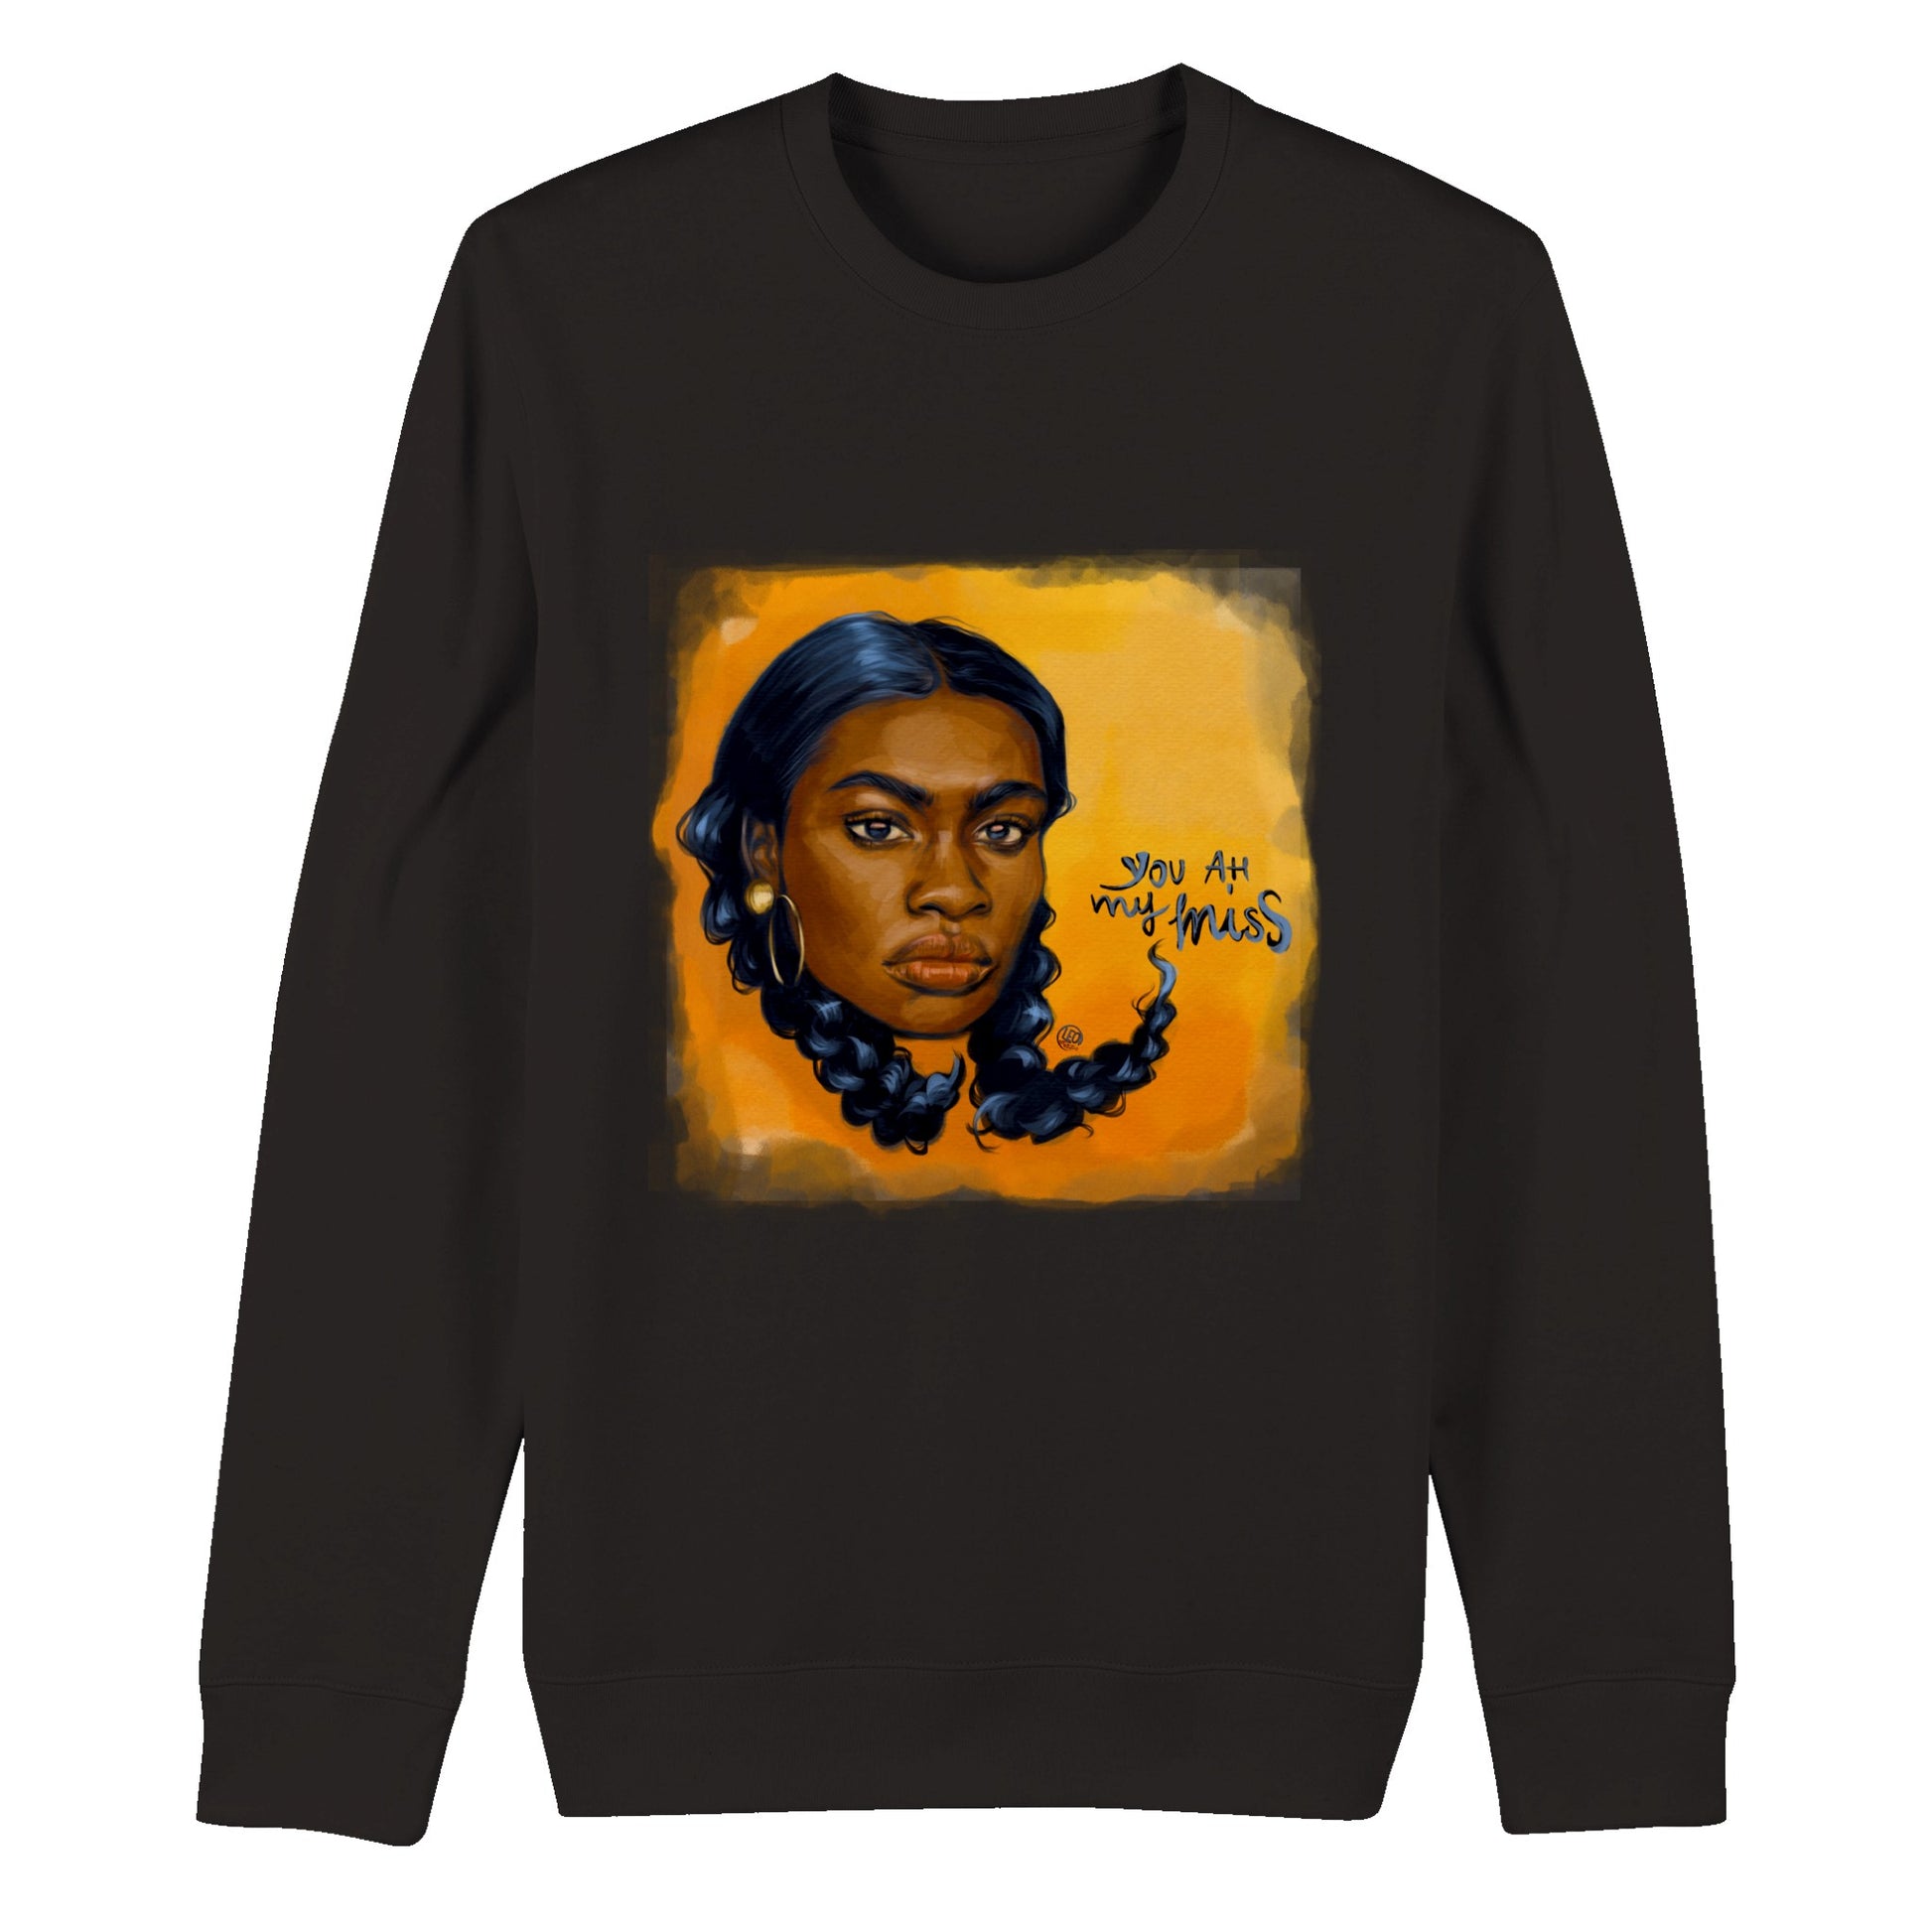 "You ah my miss" Digital Art sweatshirt organic from Leonora, print it on a fine sweatshirt in good quality! Reggae and Dancehall Art prints!